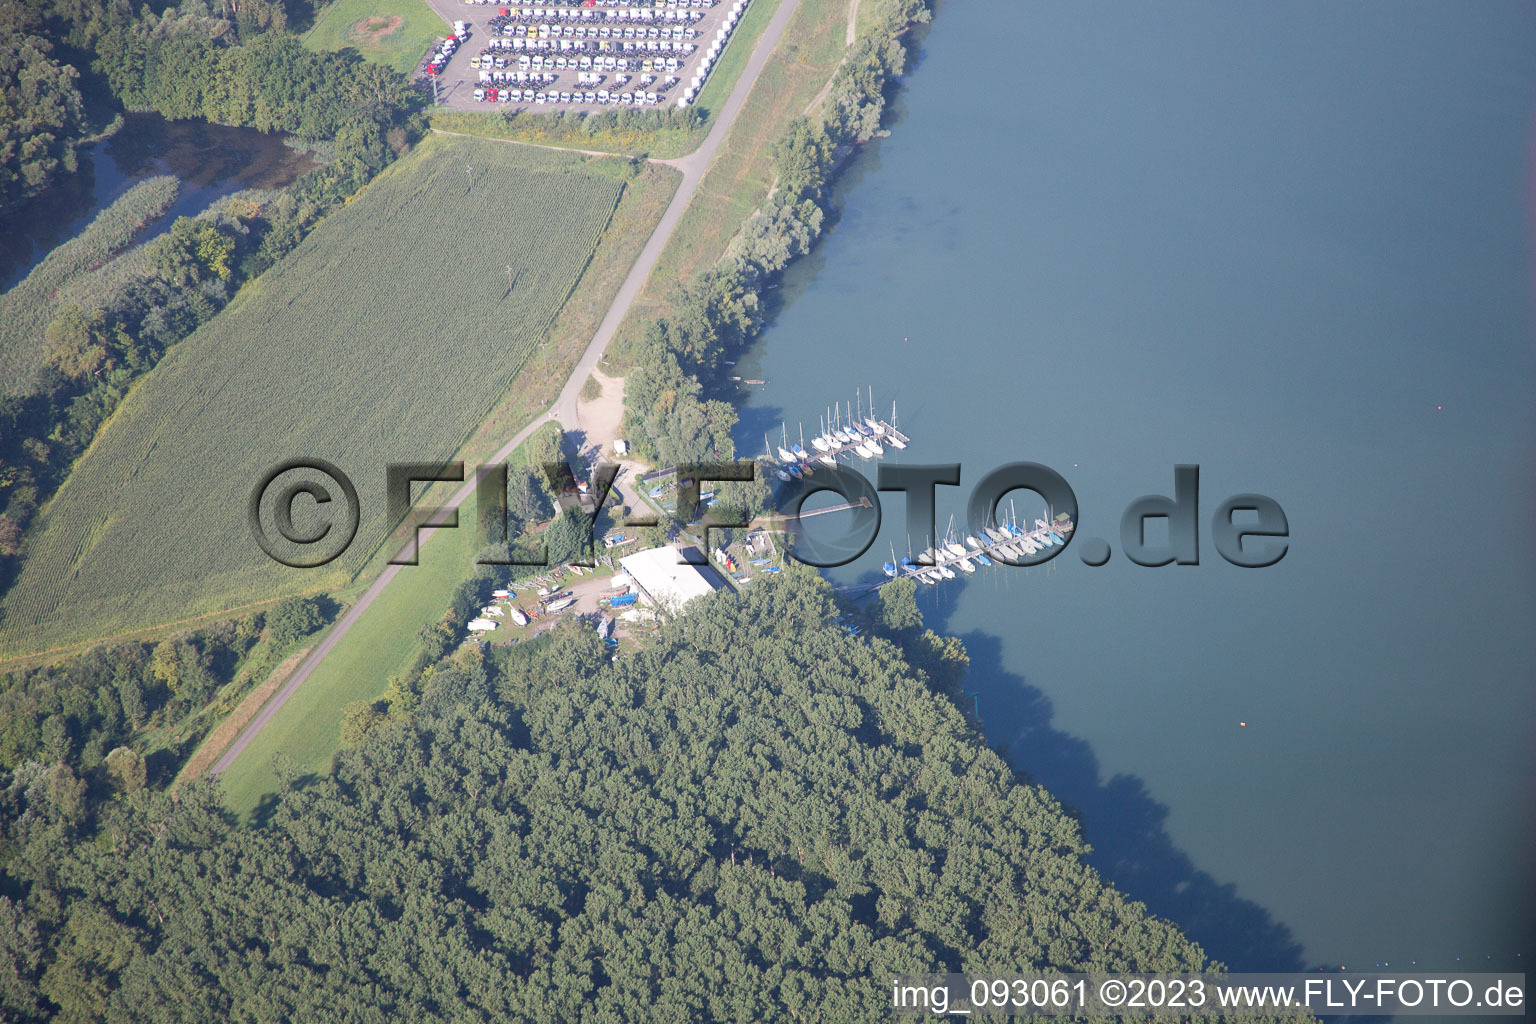 Aerial view of Sailing club in the district Maximiliansau in Wörth am Rhein in the state Rhineland-Palatinate, Germany